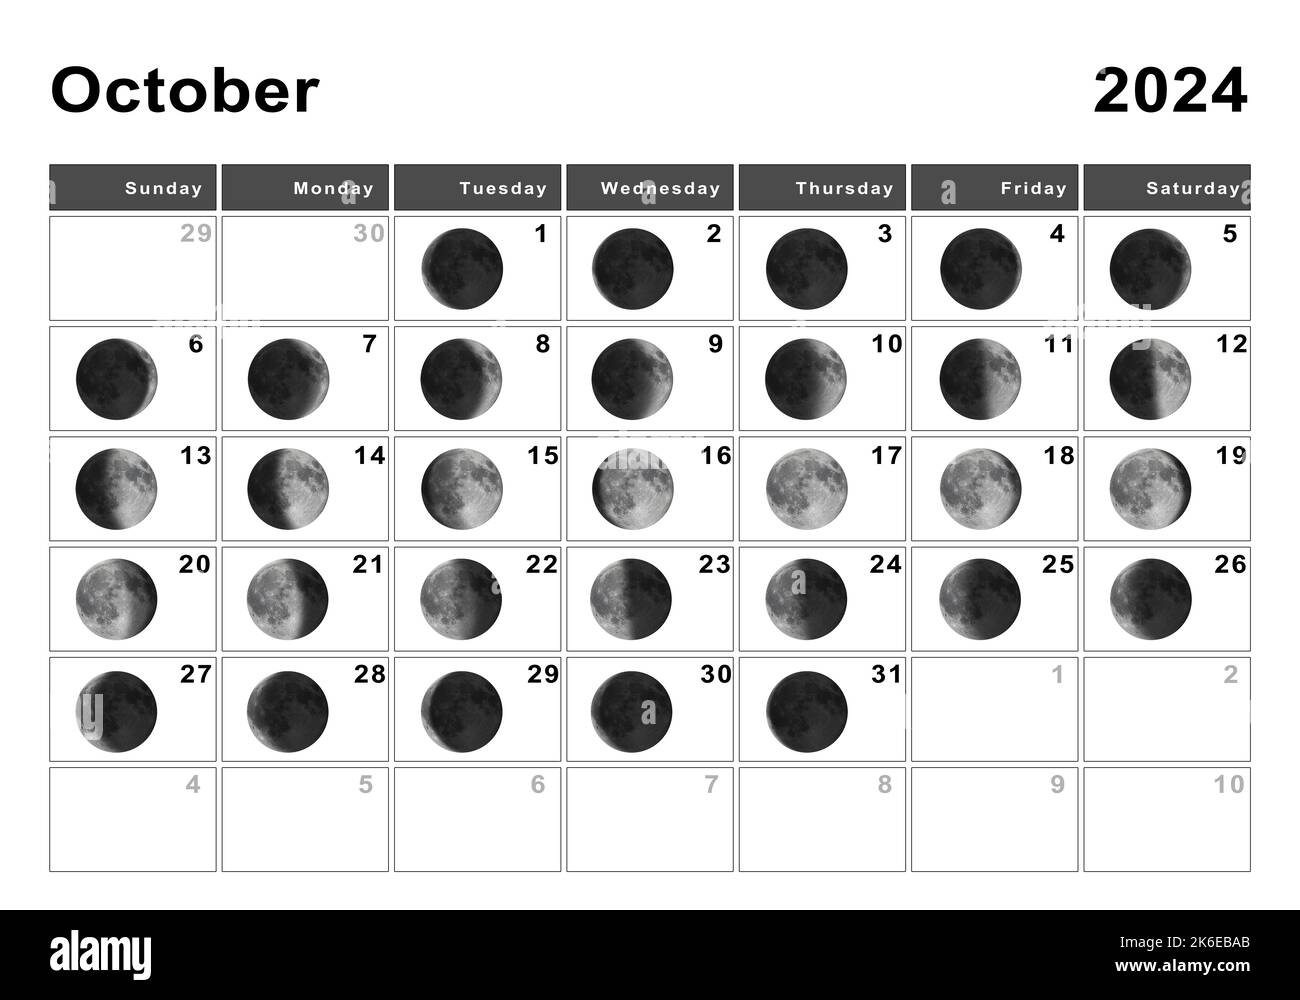 Plantilla de calendario lunar 2024 dibujada a mano con elementos esotéricos